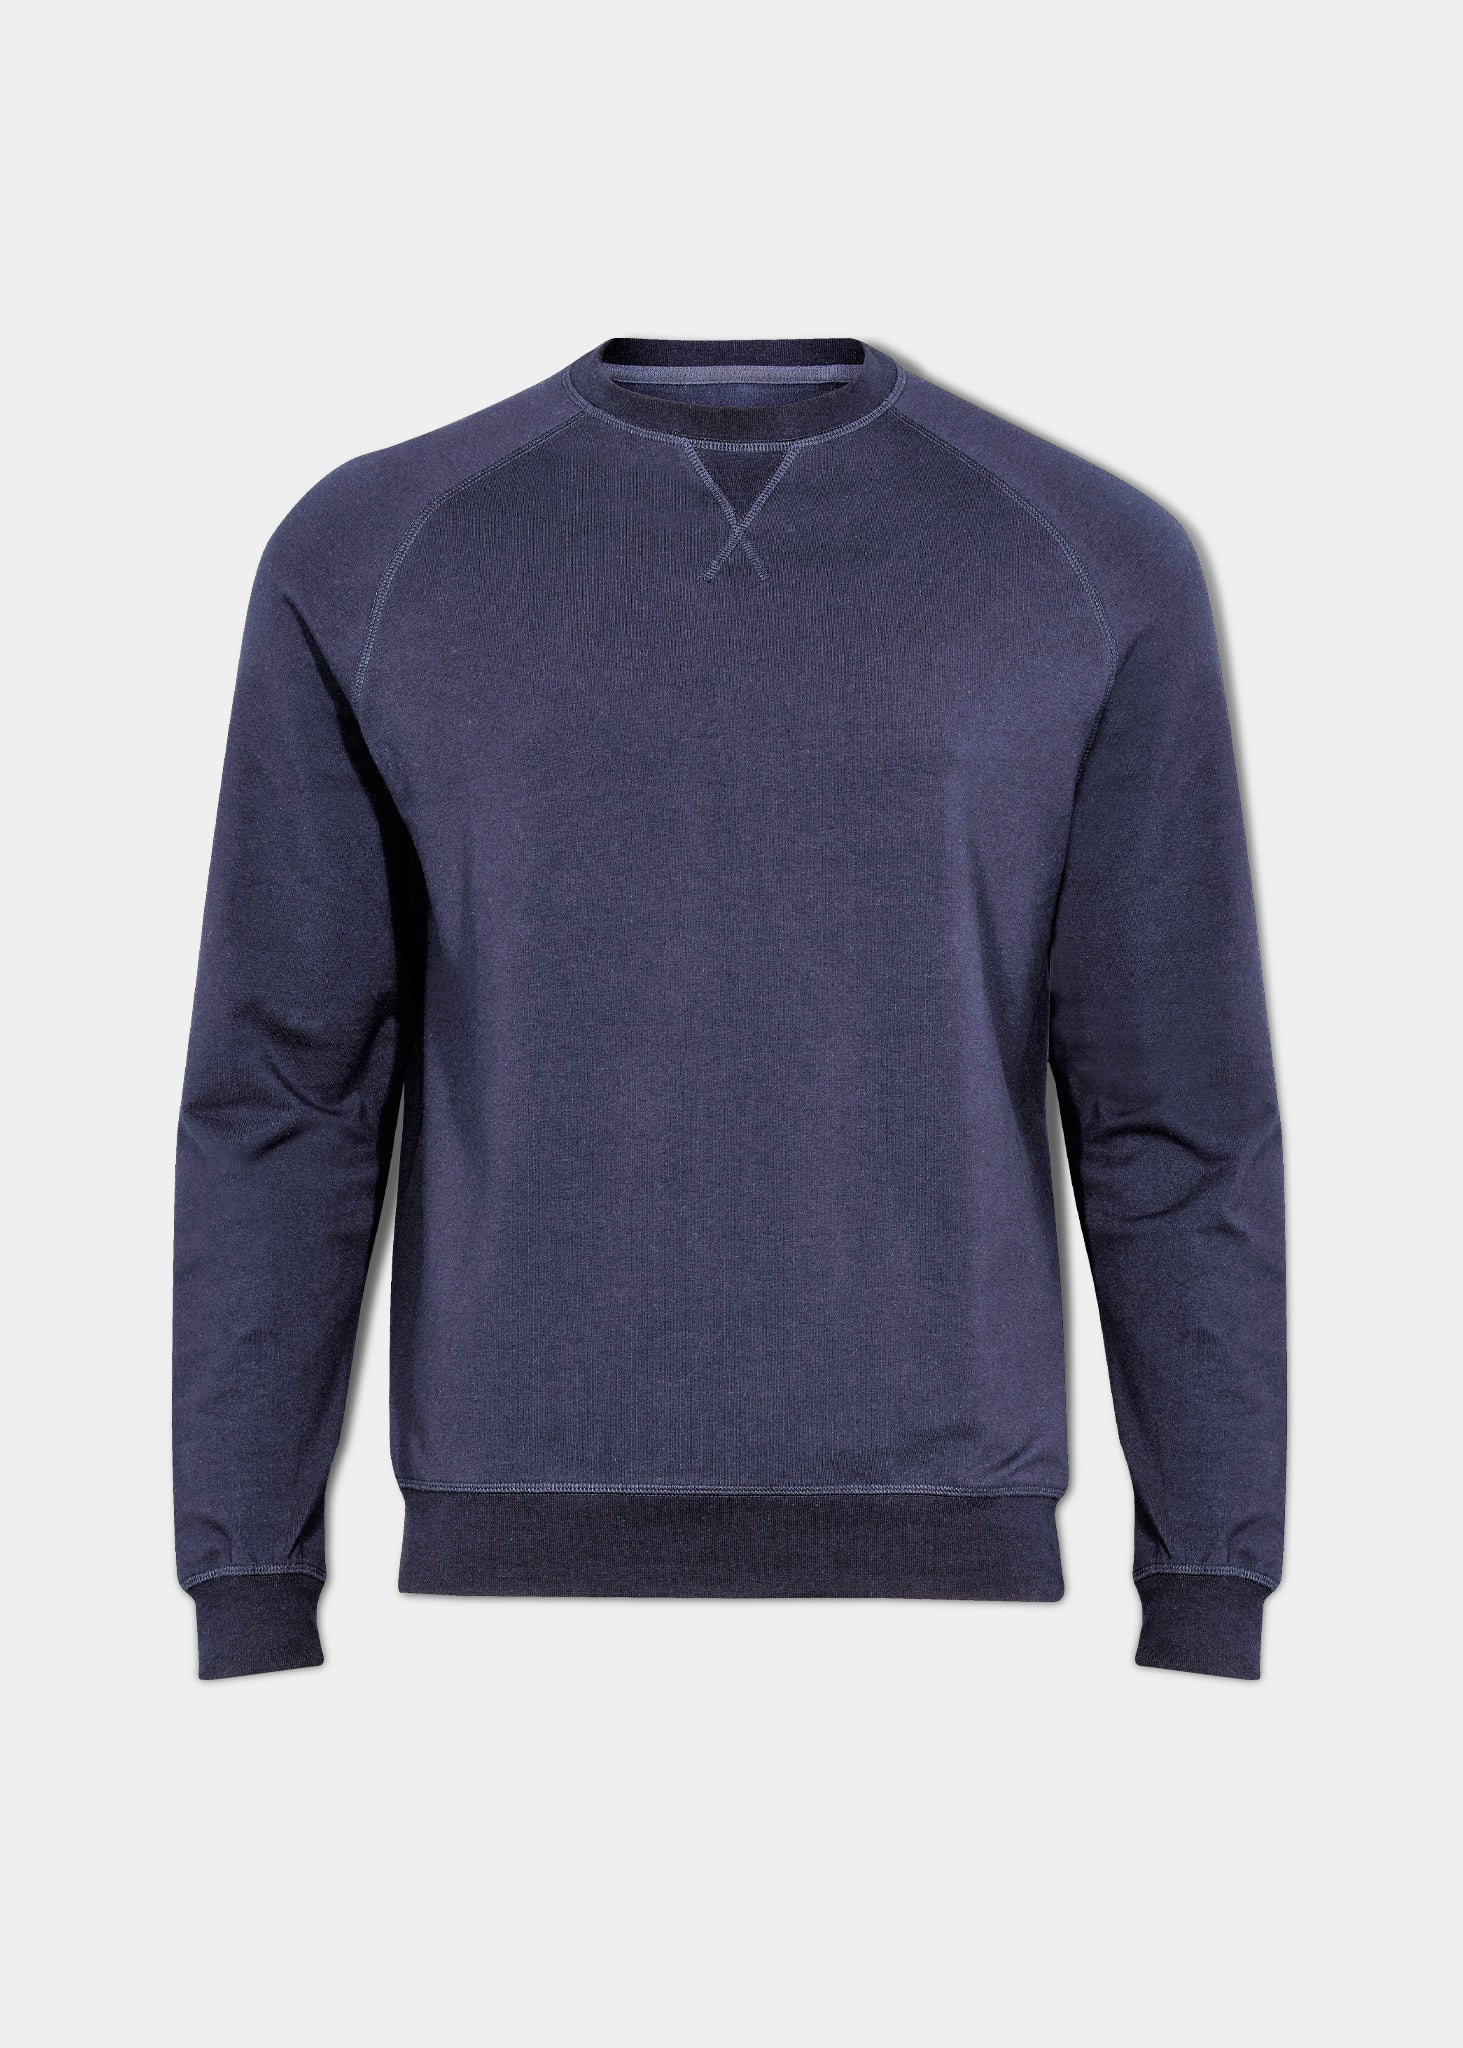 alan-paine-mens-cotton-sweatshirt-loungewear-navy